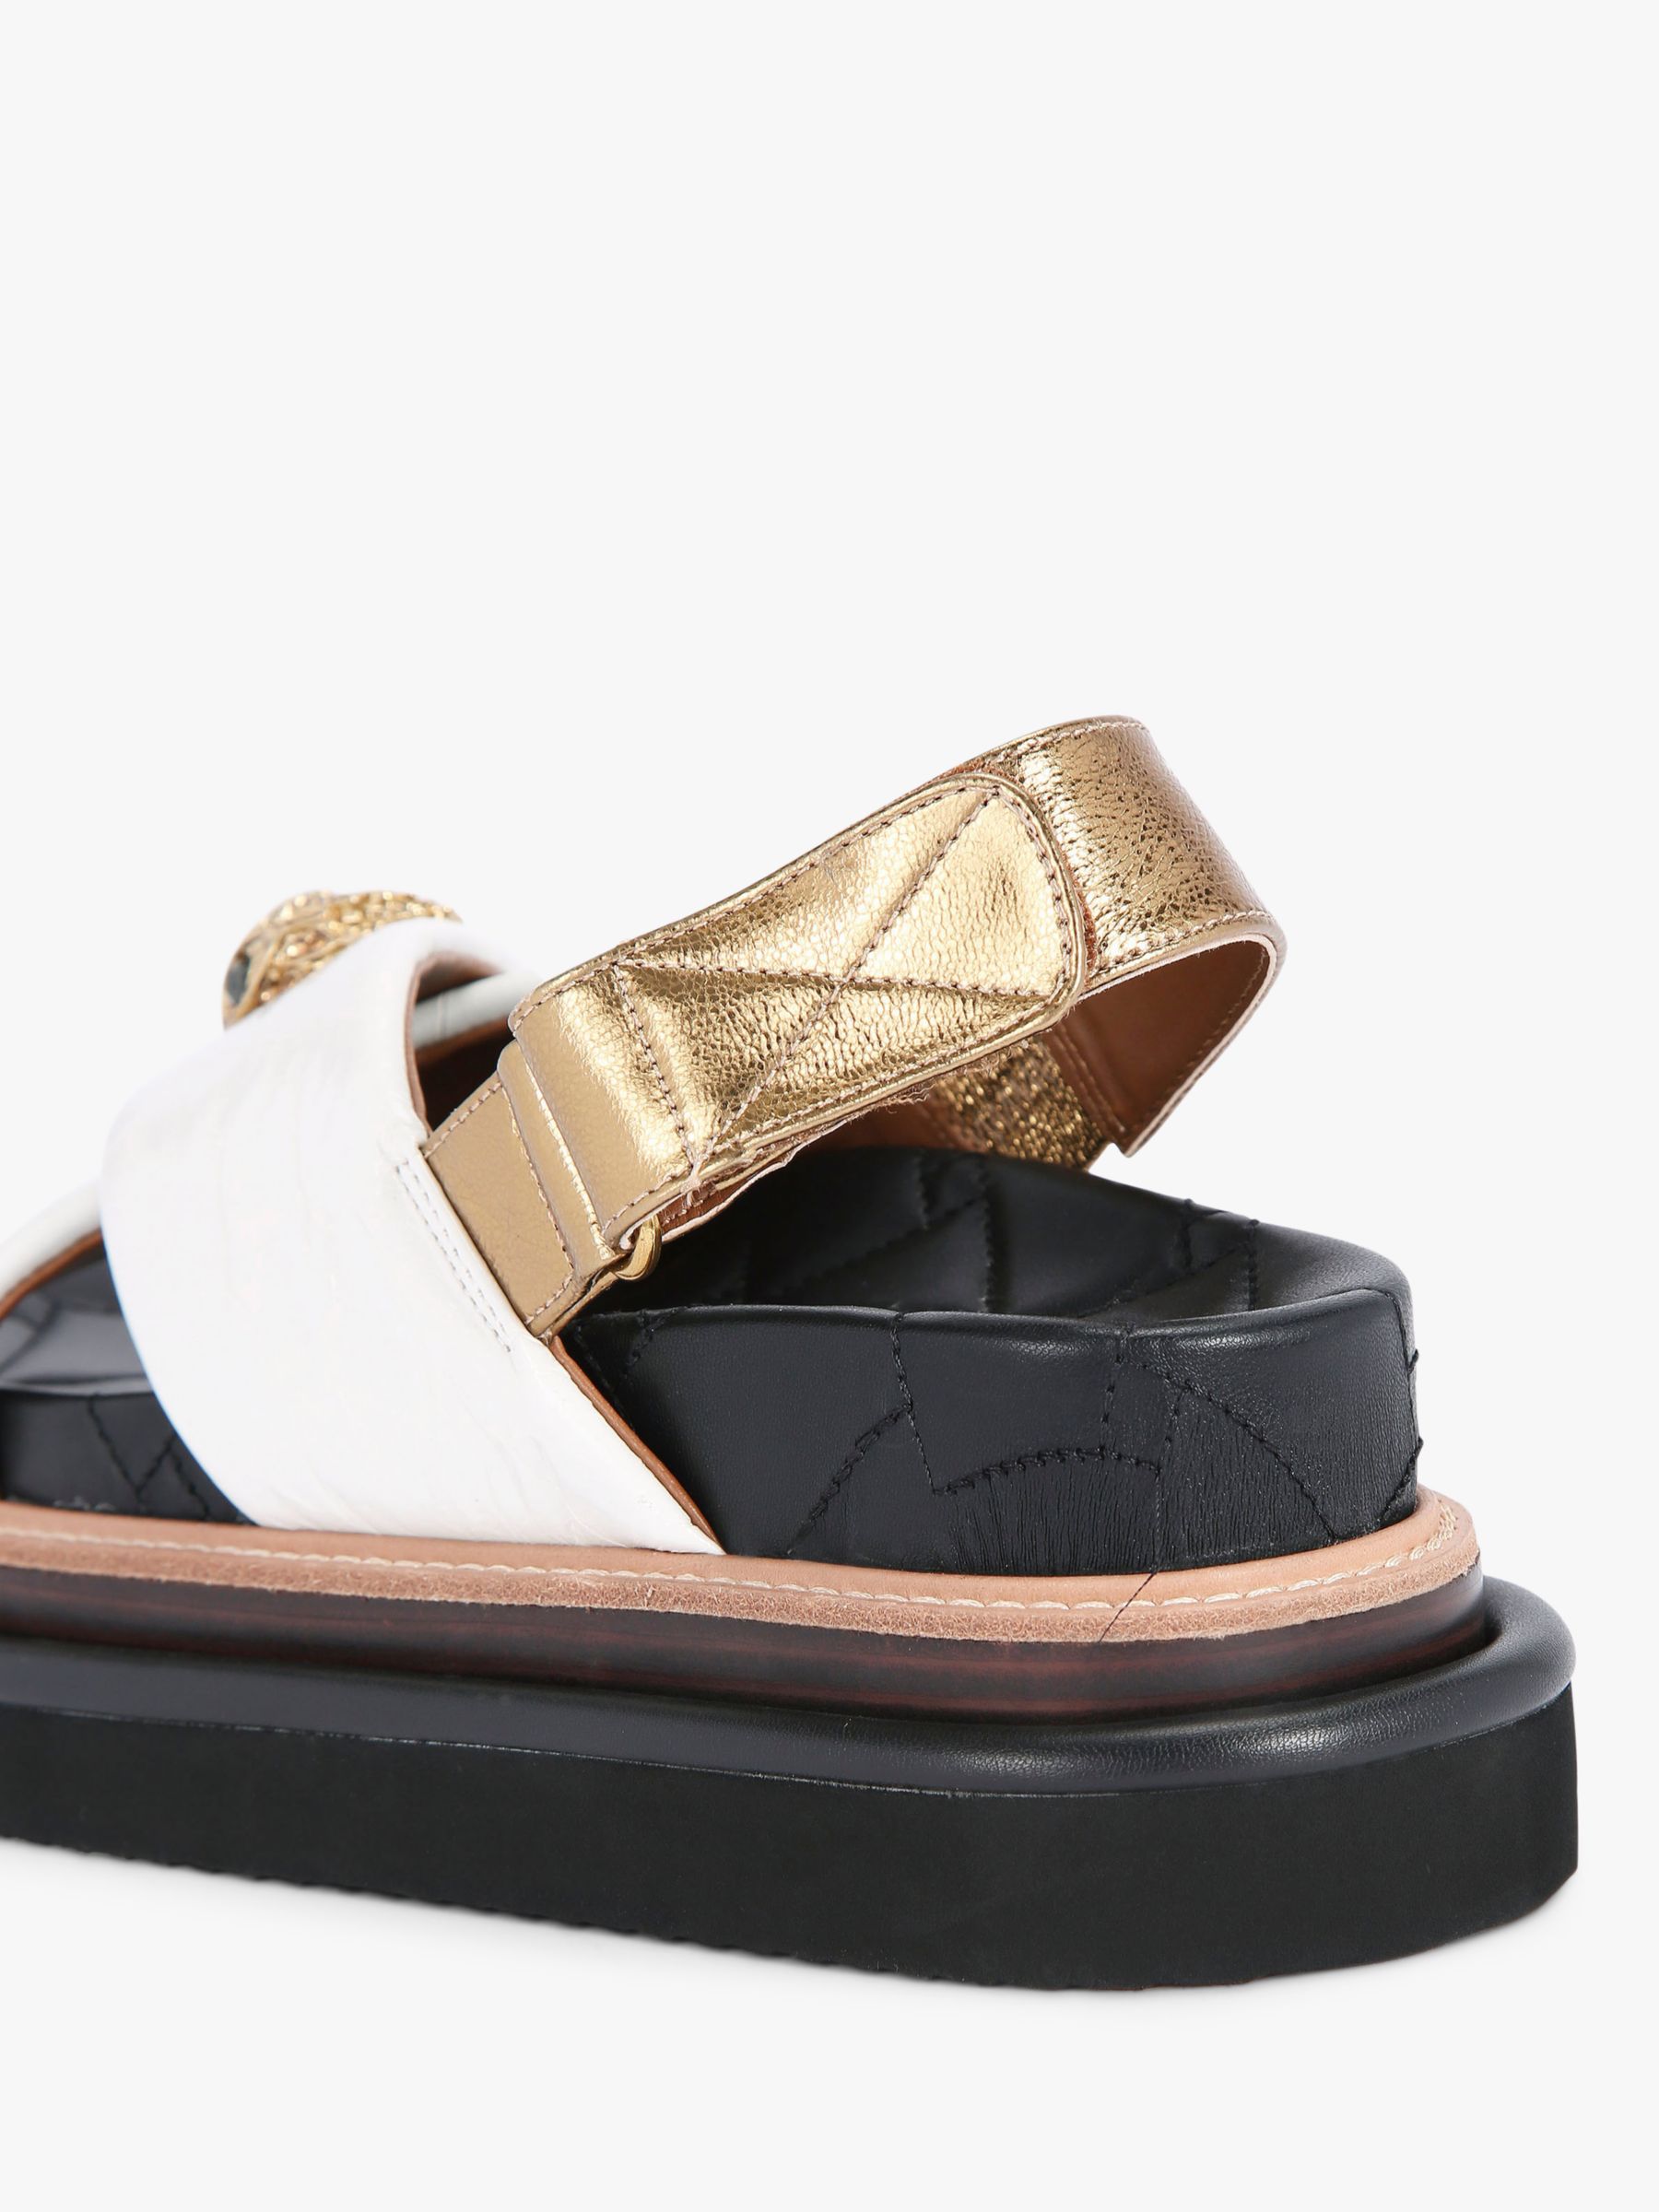 Buy Kurt Geiger London Orson Leather Cross Strap Sandals Online at johnlewis.com